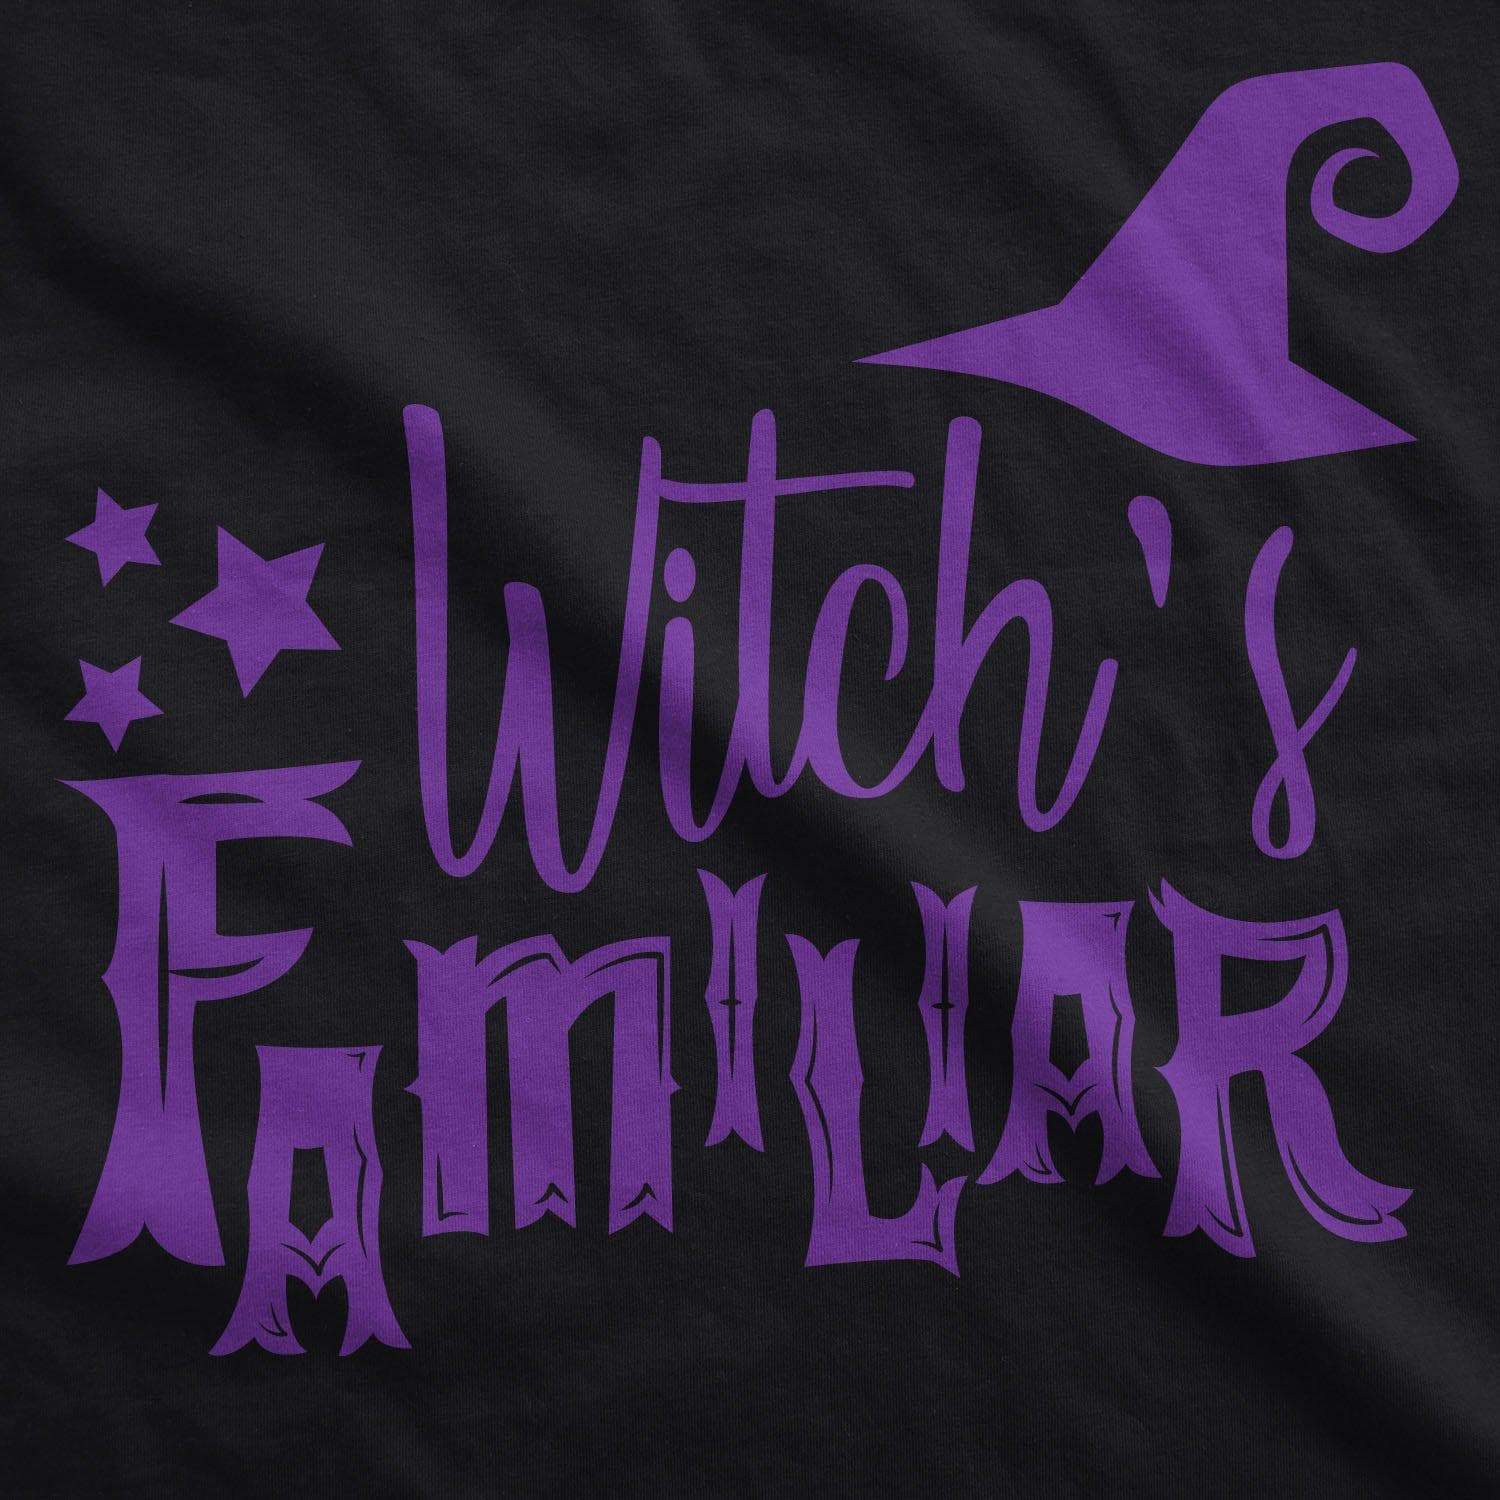 Witch's Familiar Dog Shirt - Crazy Dog T-Shirts